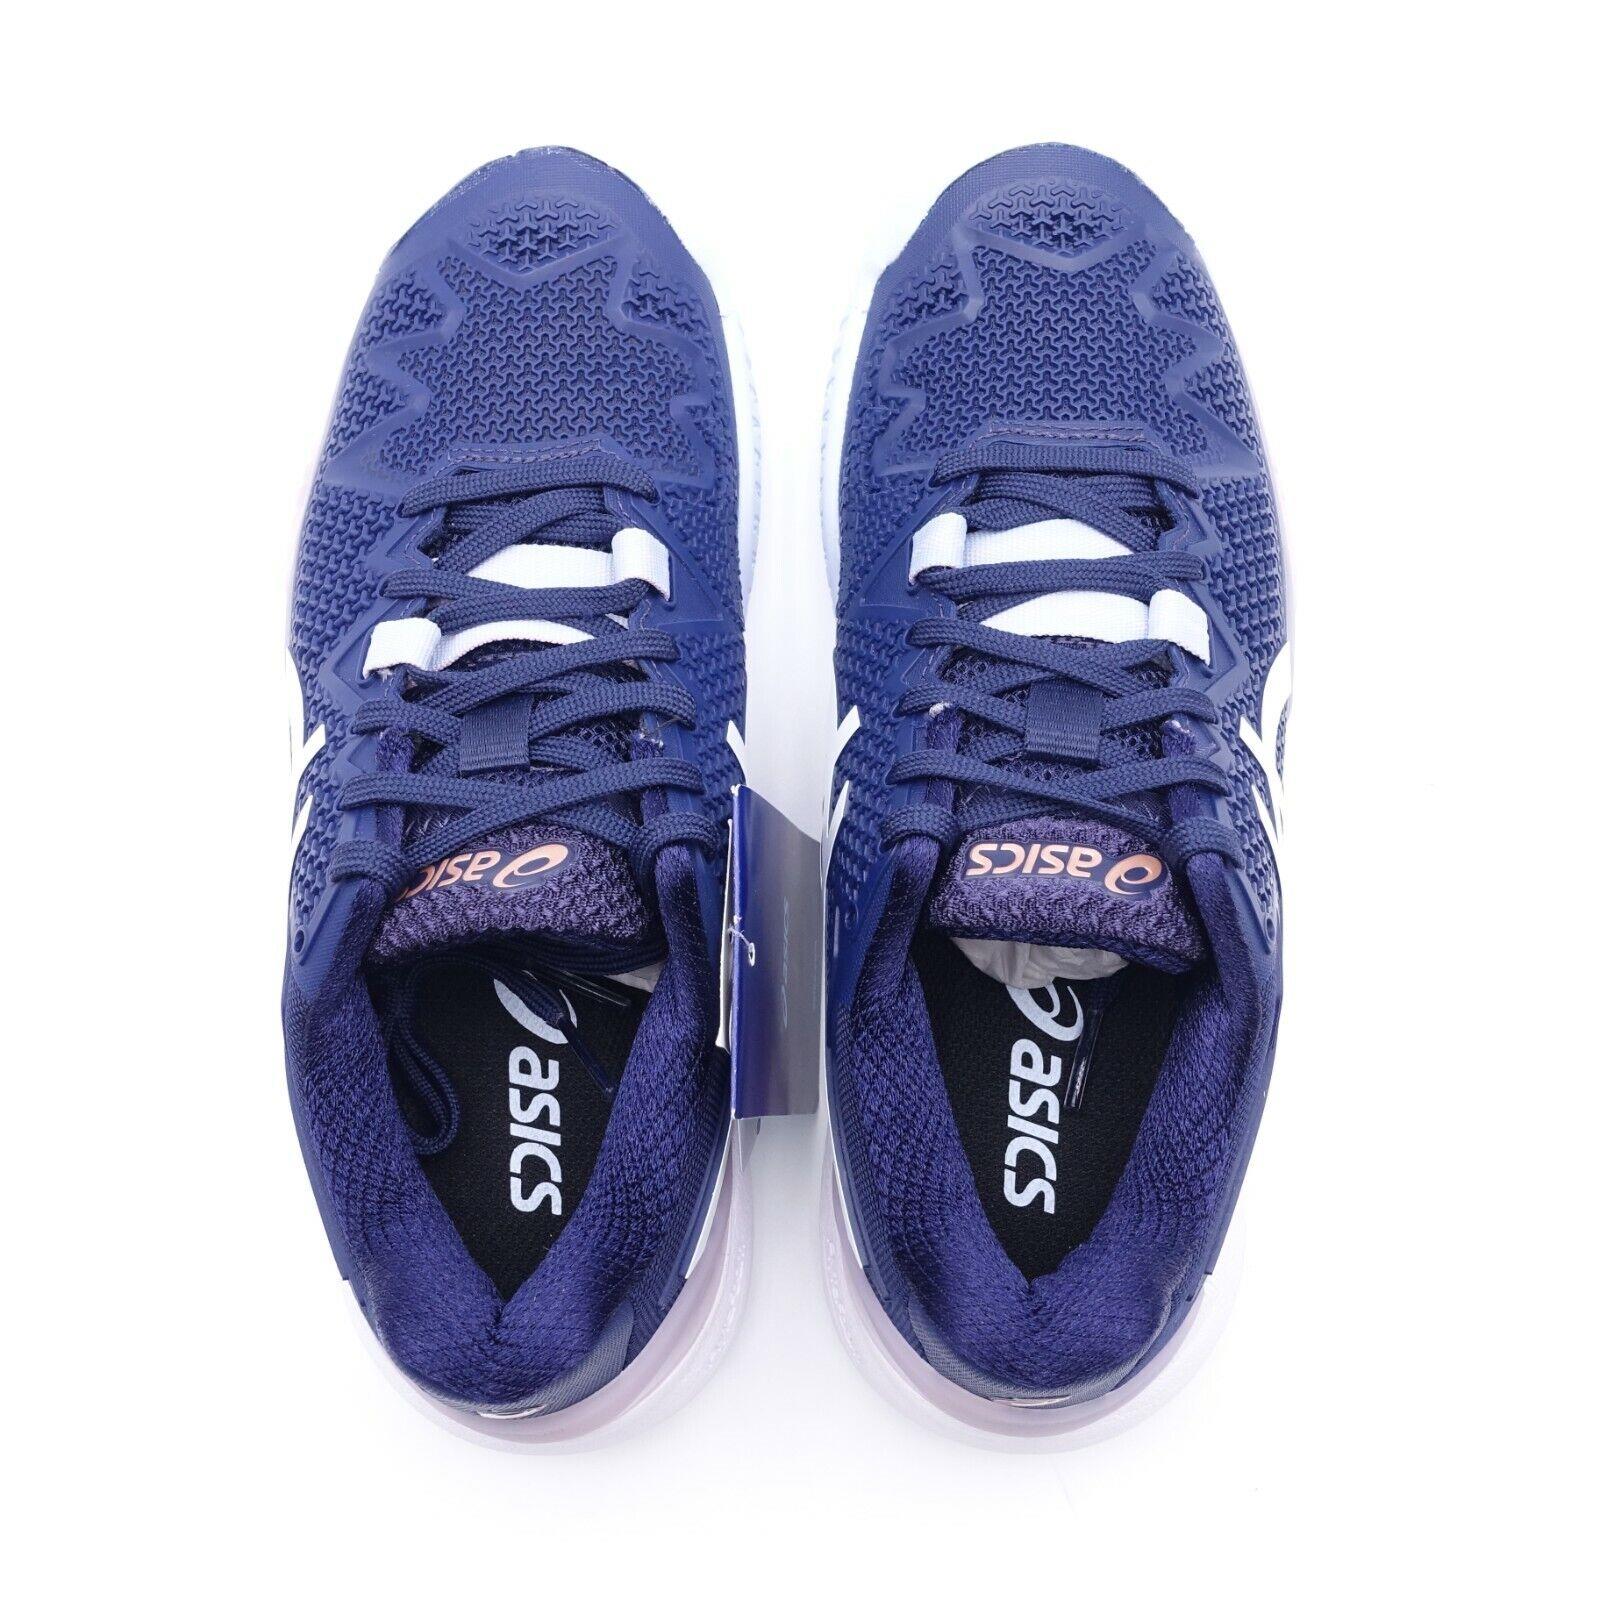 ASICS shoes  - Blue , Peacoat/White Manufacturer 3